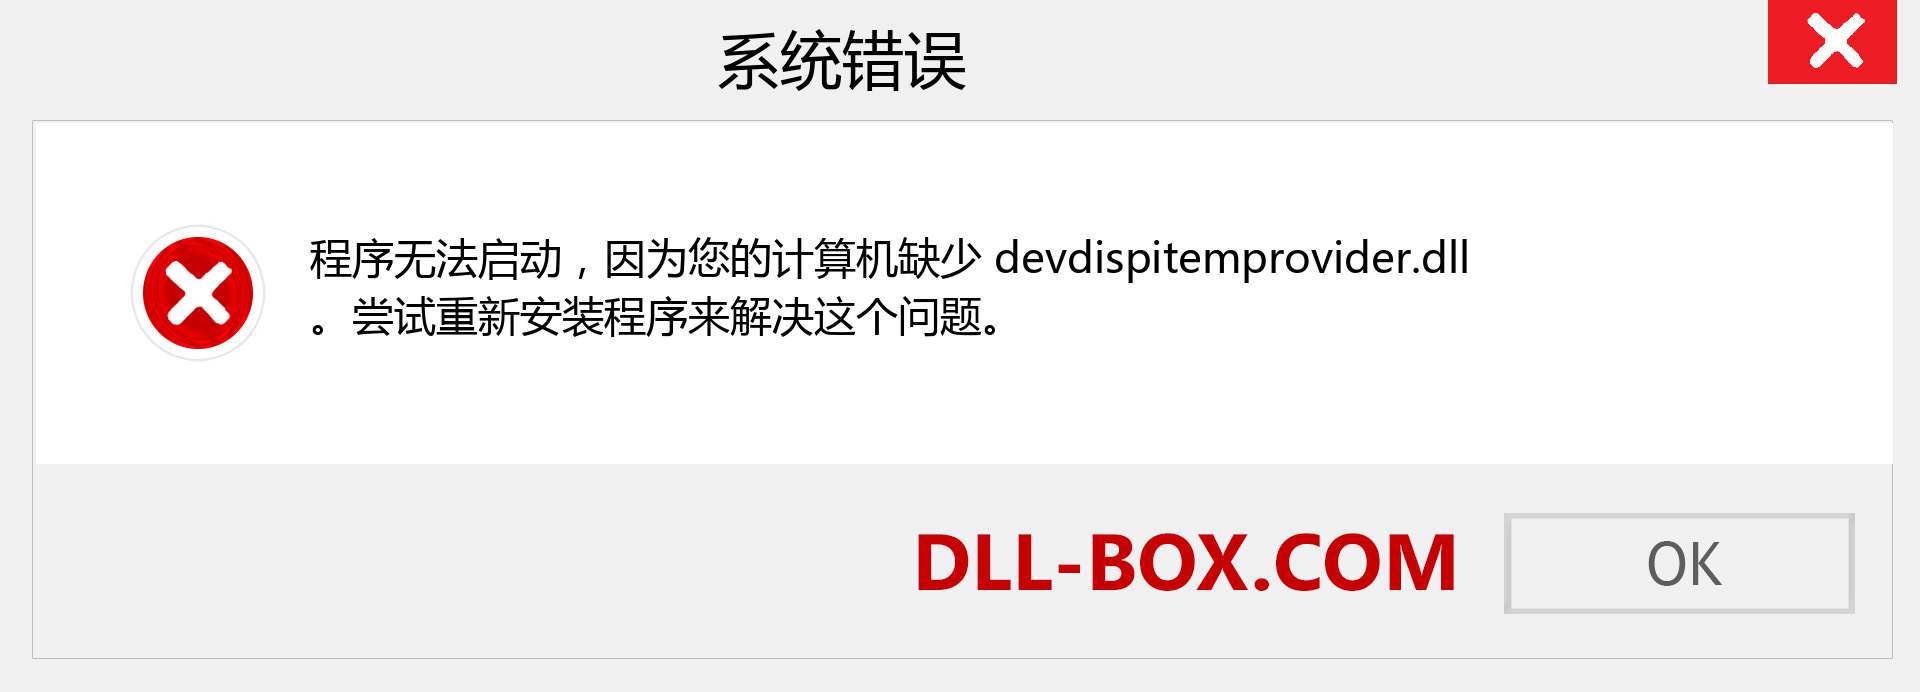 devdispitemprovider.dll 文件丢失？。 适用于 Windows 7、8、10 的下载 - 修复 Windows、照片、图像上的 devdispitemprovider dll 丢失错误